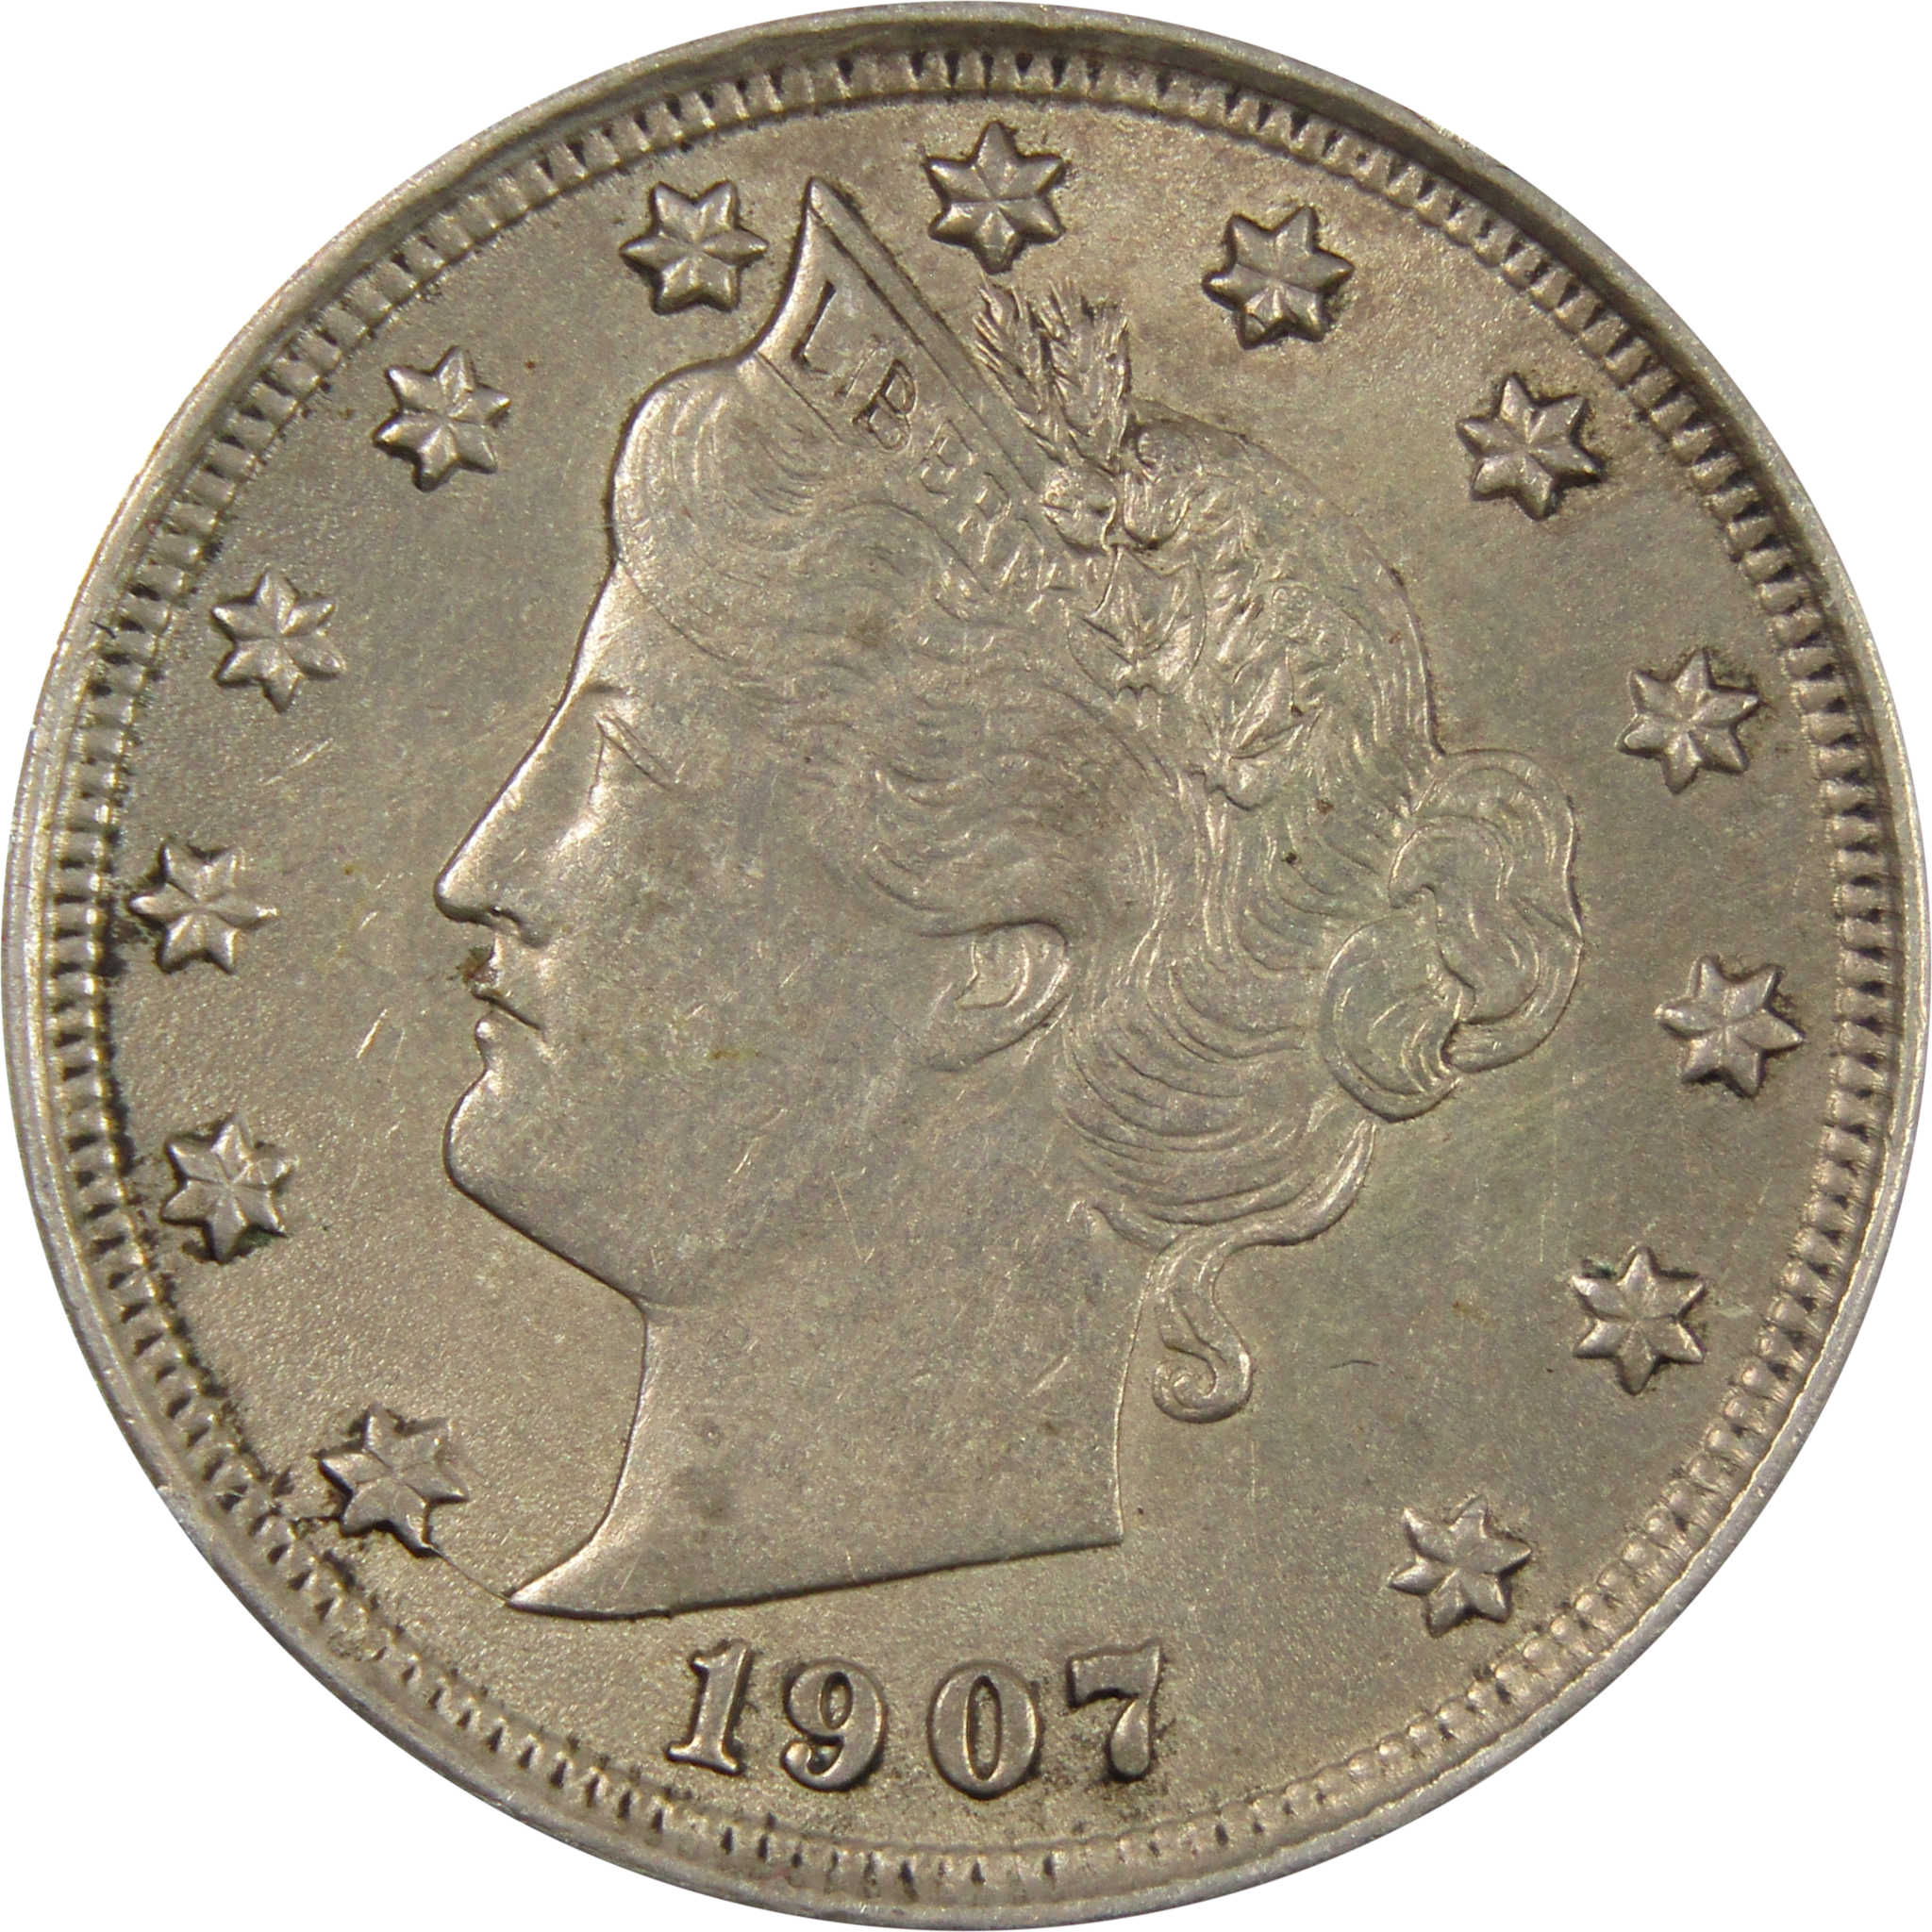 1907 Liberty Head V Nickel Uncirculated Details 5c Coin SKU:I7348